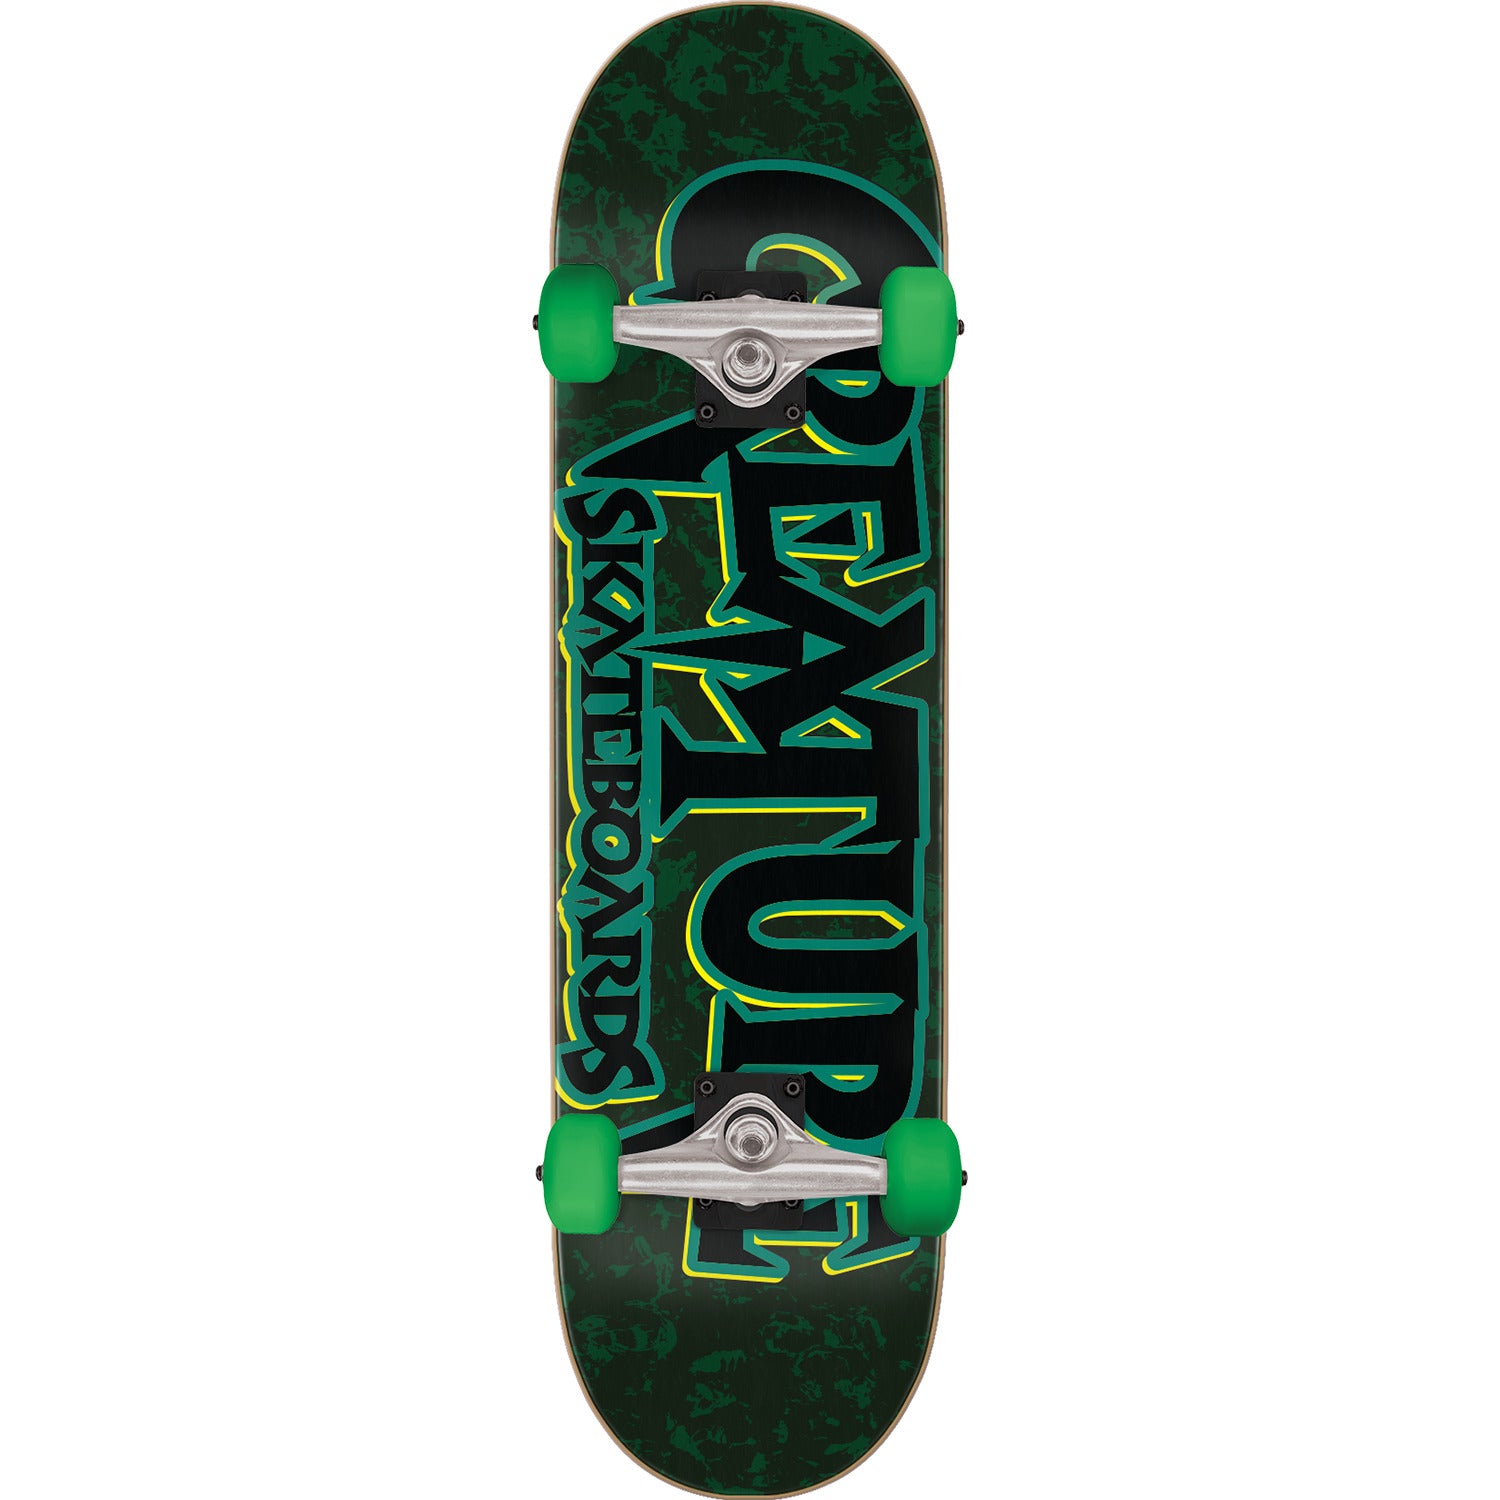 Creature цена. Скейтборд creature. World industries скейтборд зеленый. Creature Skateboards.